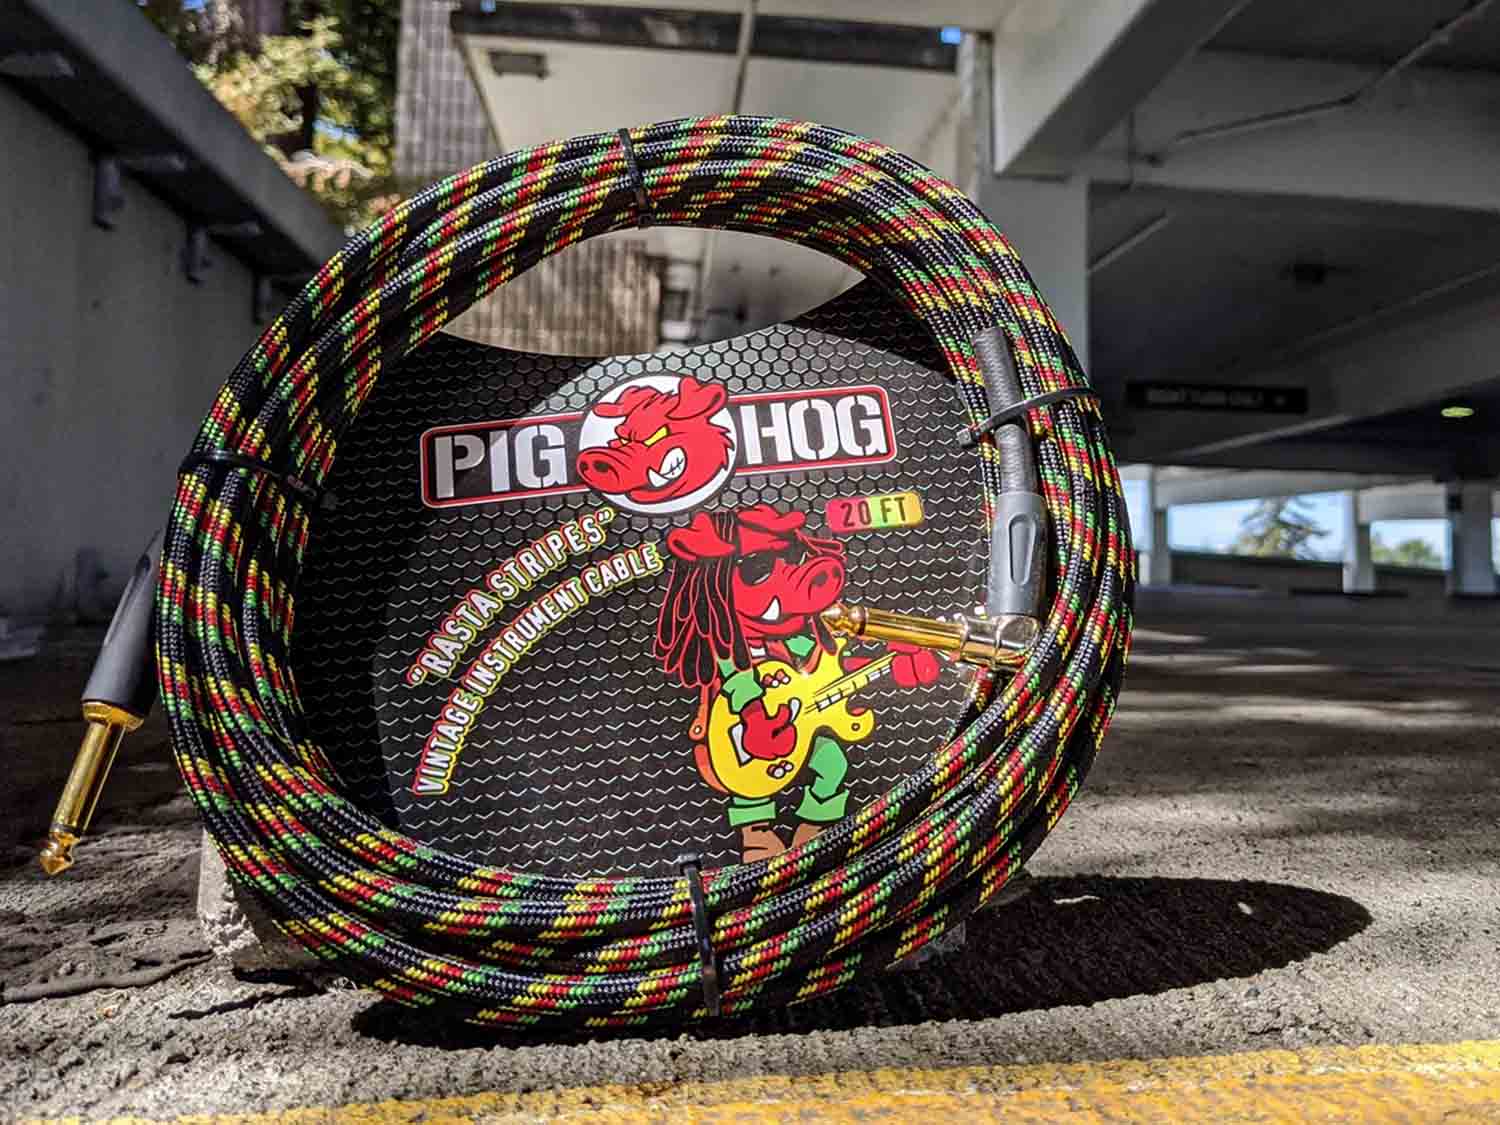 Pig Hog PCH20RAR, Rasta Stripes Instrument Cable with Angled End - 20 Foot - Hollywood DJ